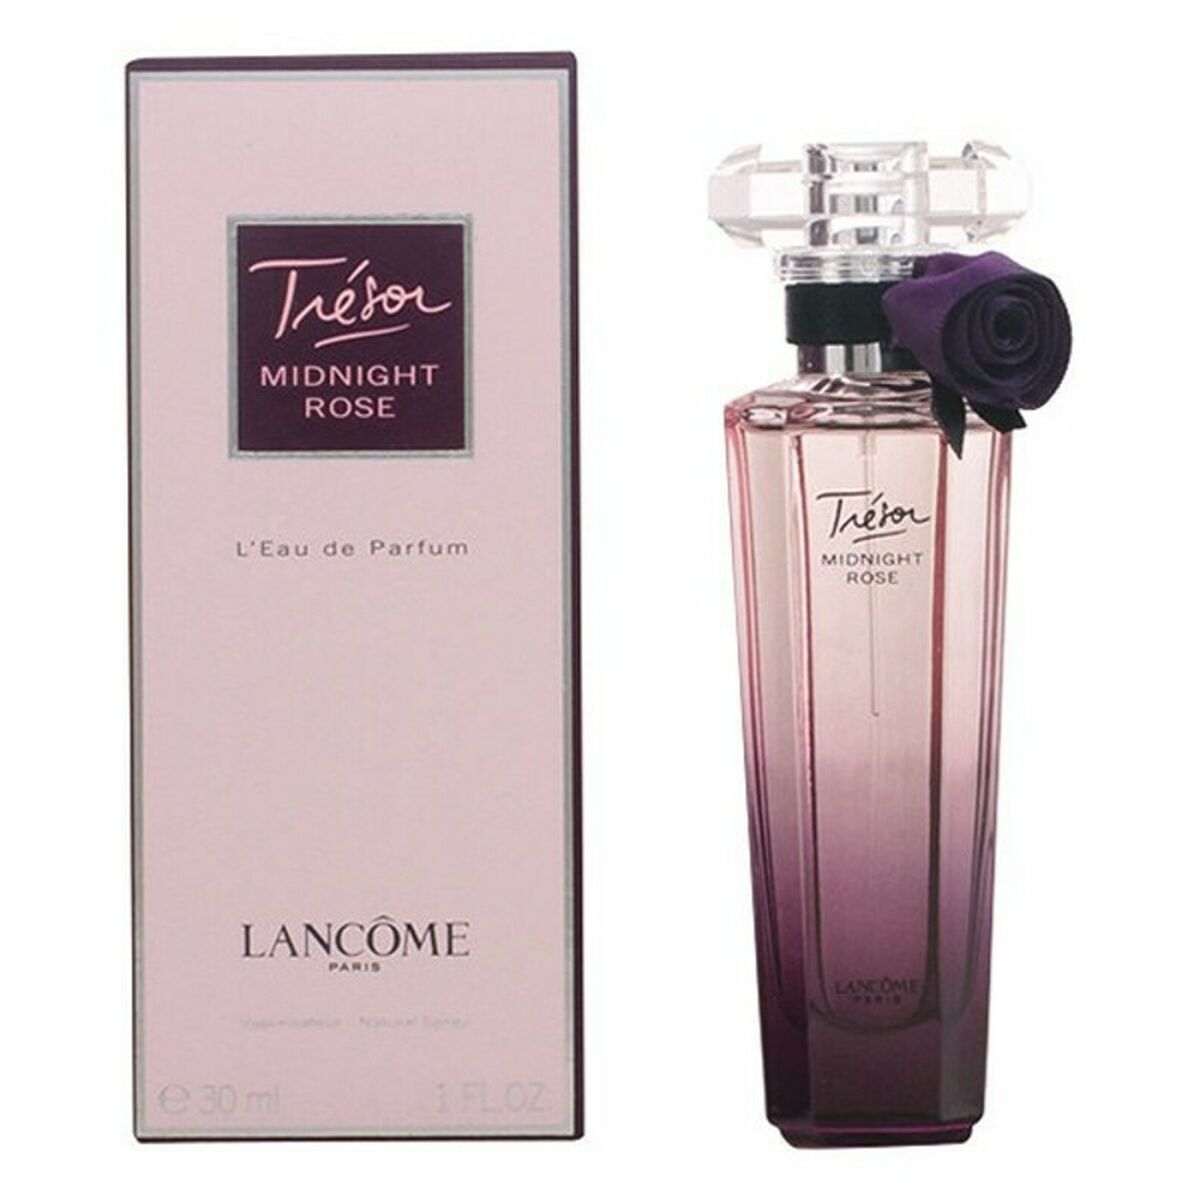 Kaufe Damenparfum Tresor Midnight Rose Lancôme EDP limited edition bei AWK Flagship um € 56.00